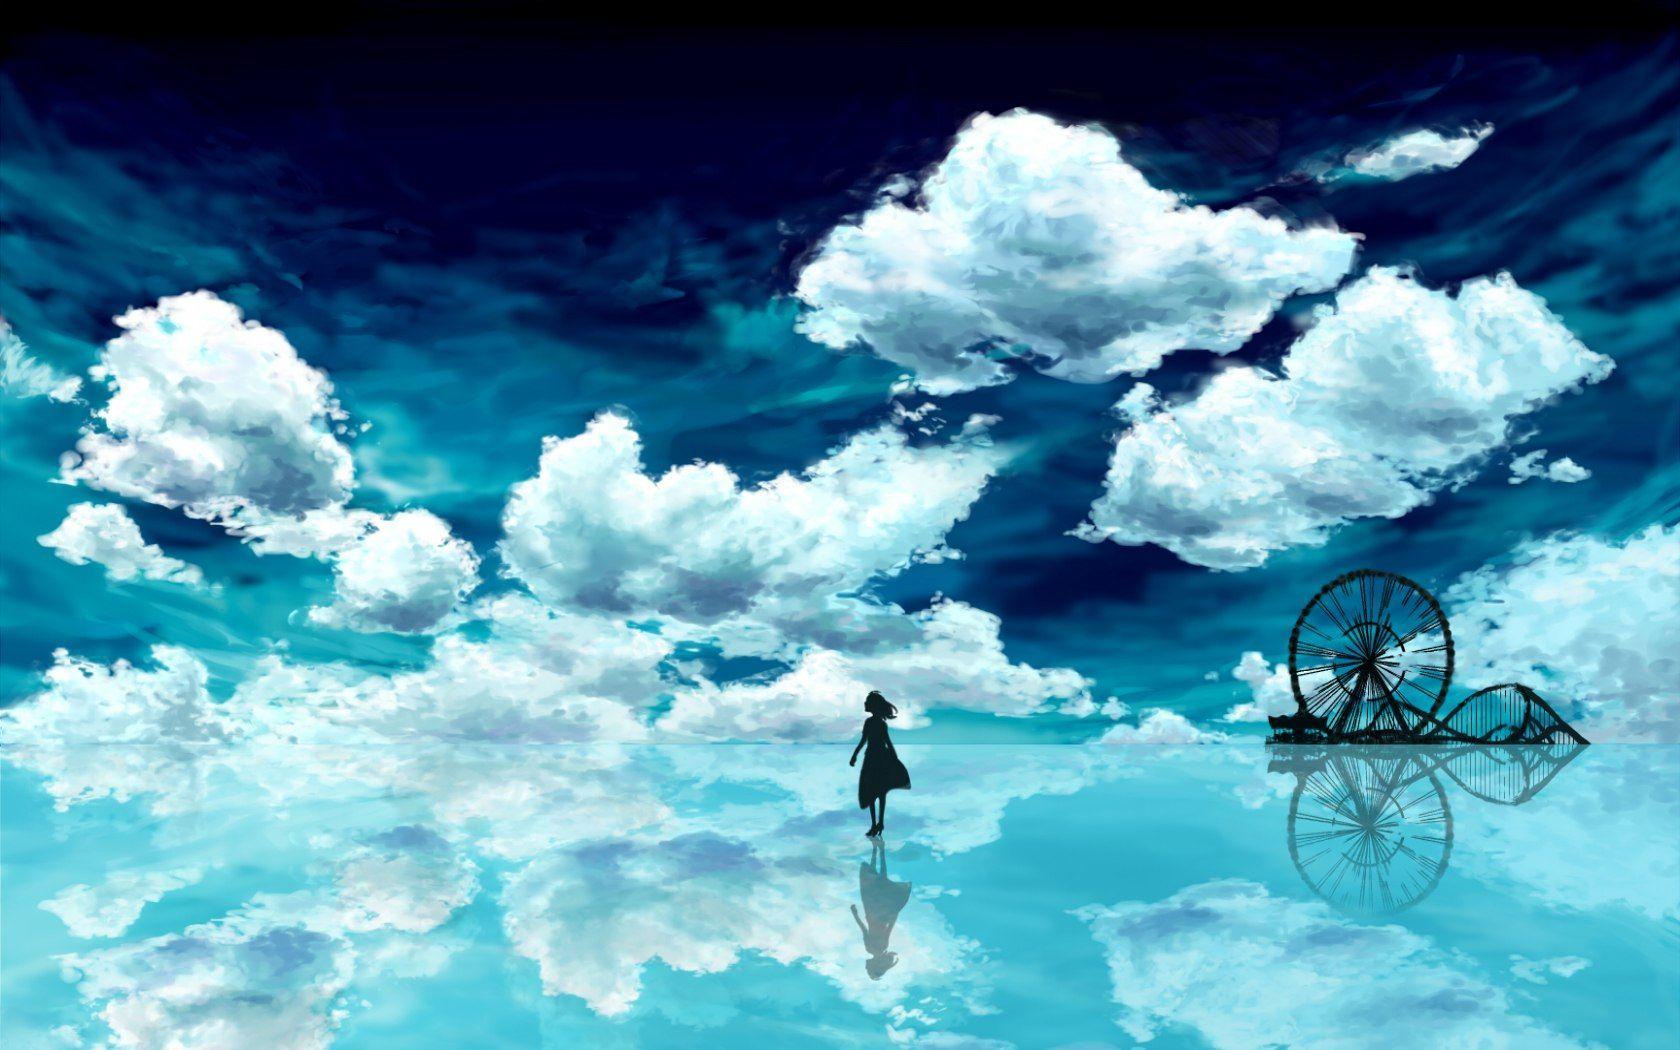 Anime Scenery Wallpaper. Beautiful Anime Scenery Wallpaper